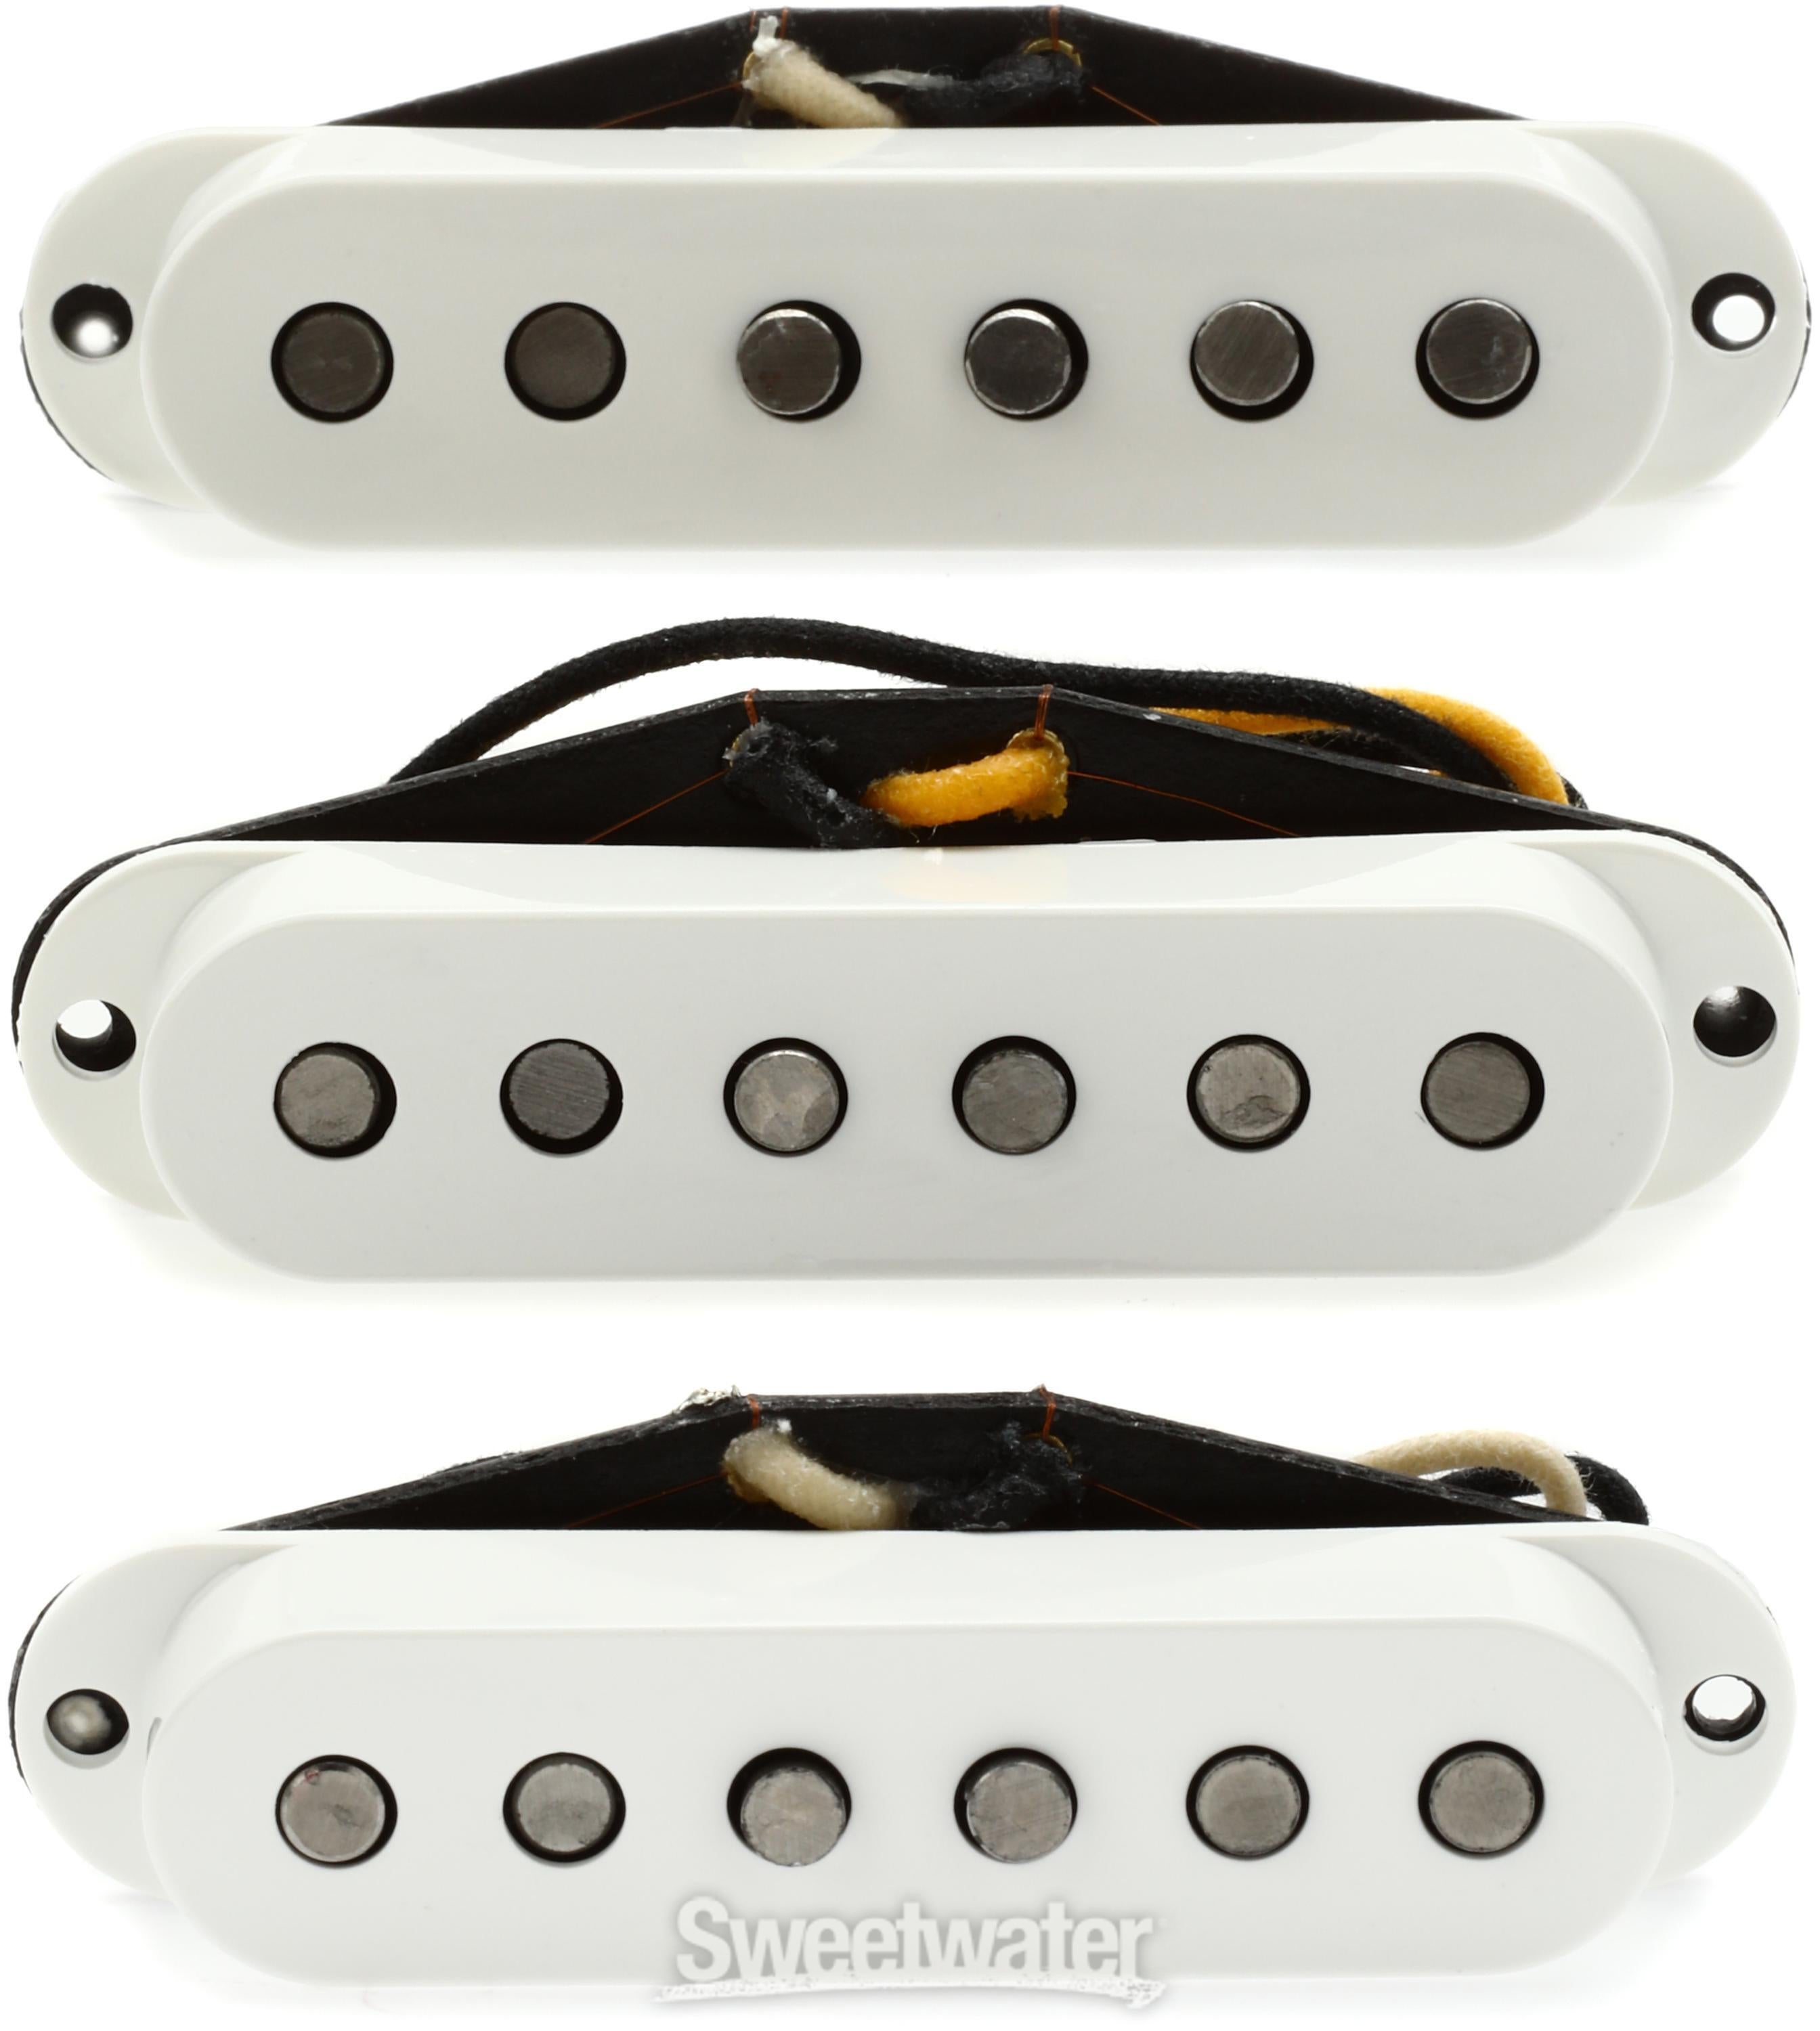 Fender Custom Shop Fat '50s Stratocaster 3-piece Pickup Set - White